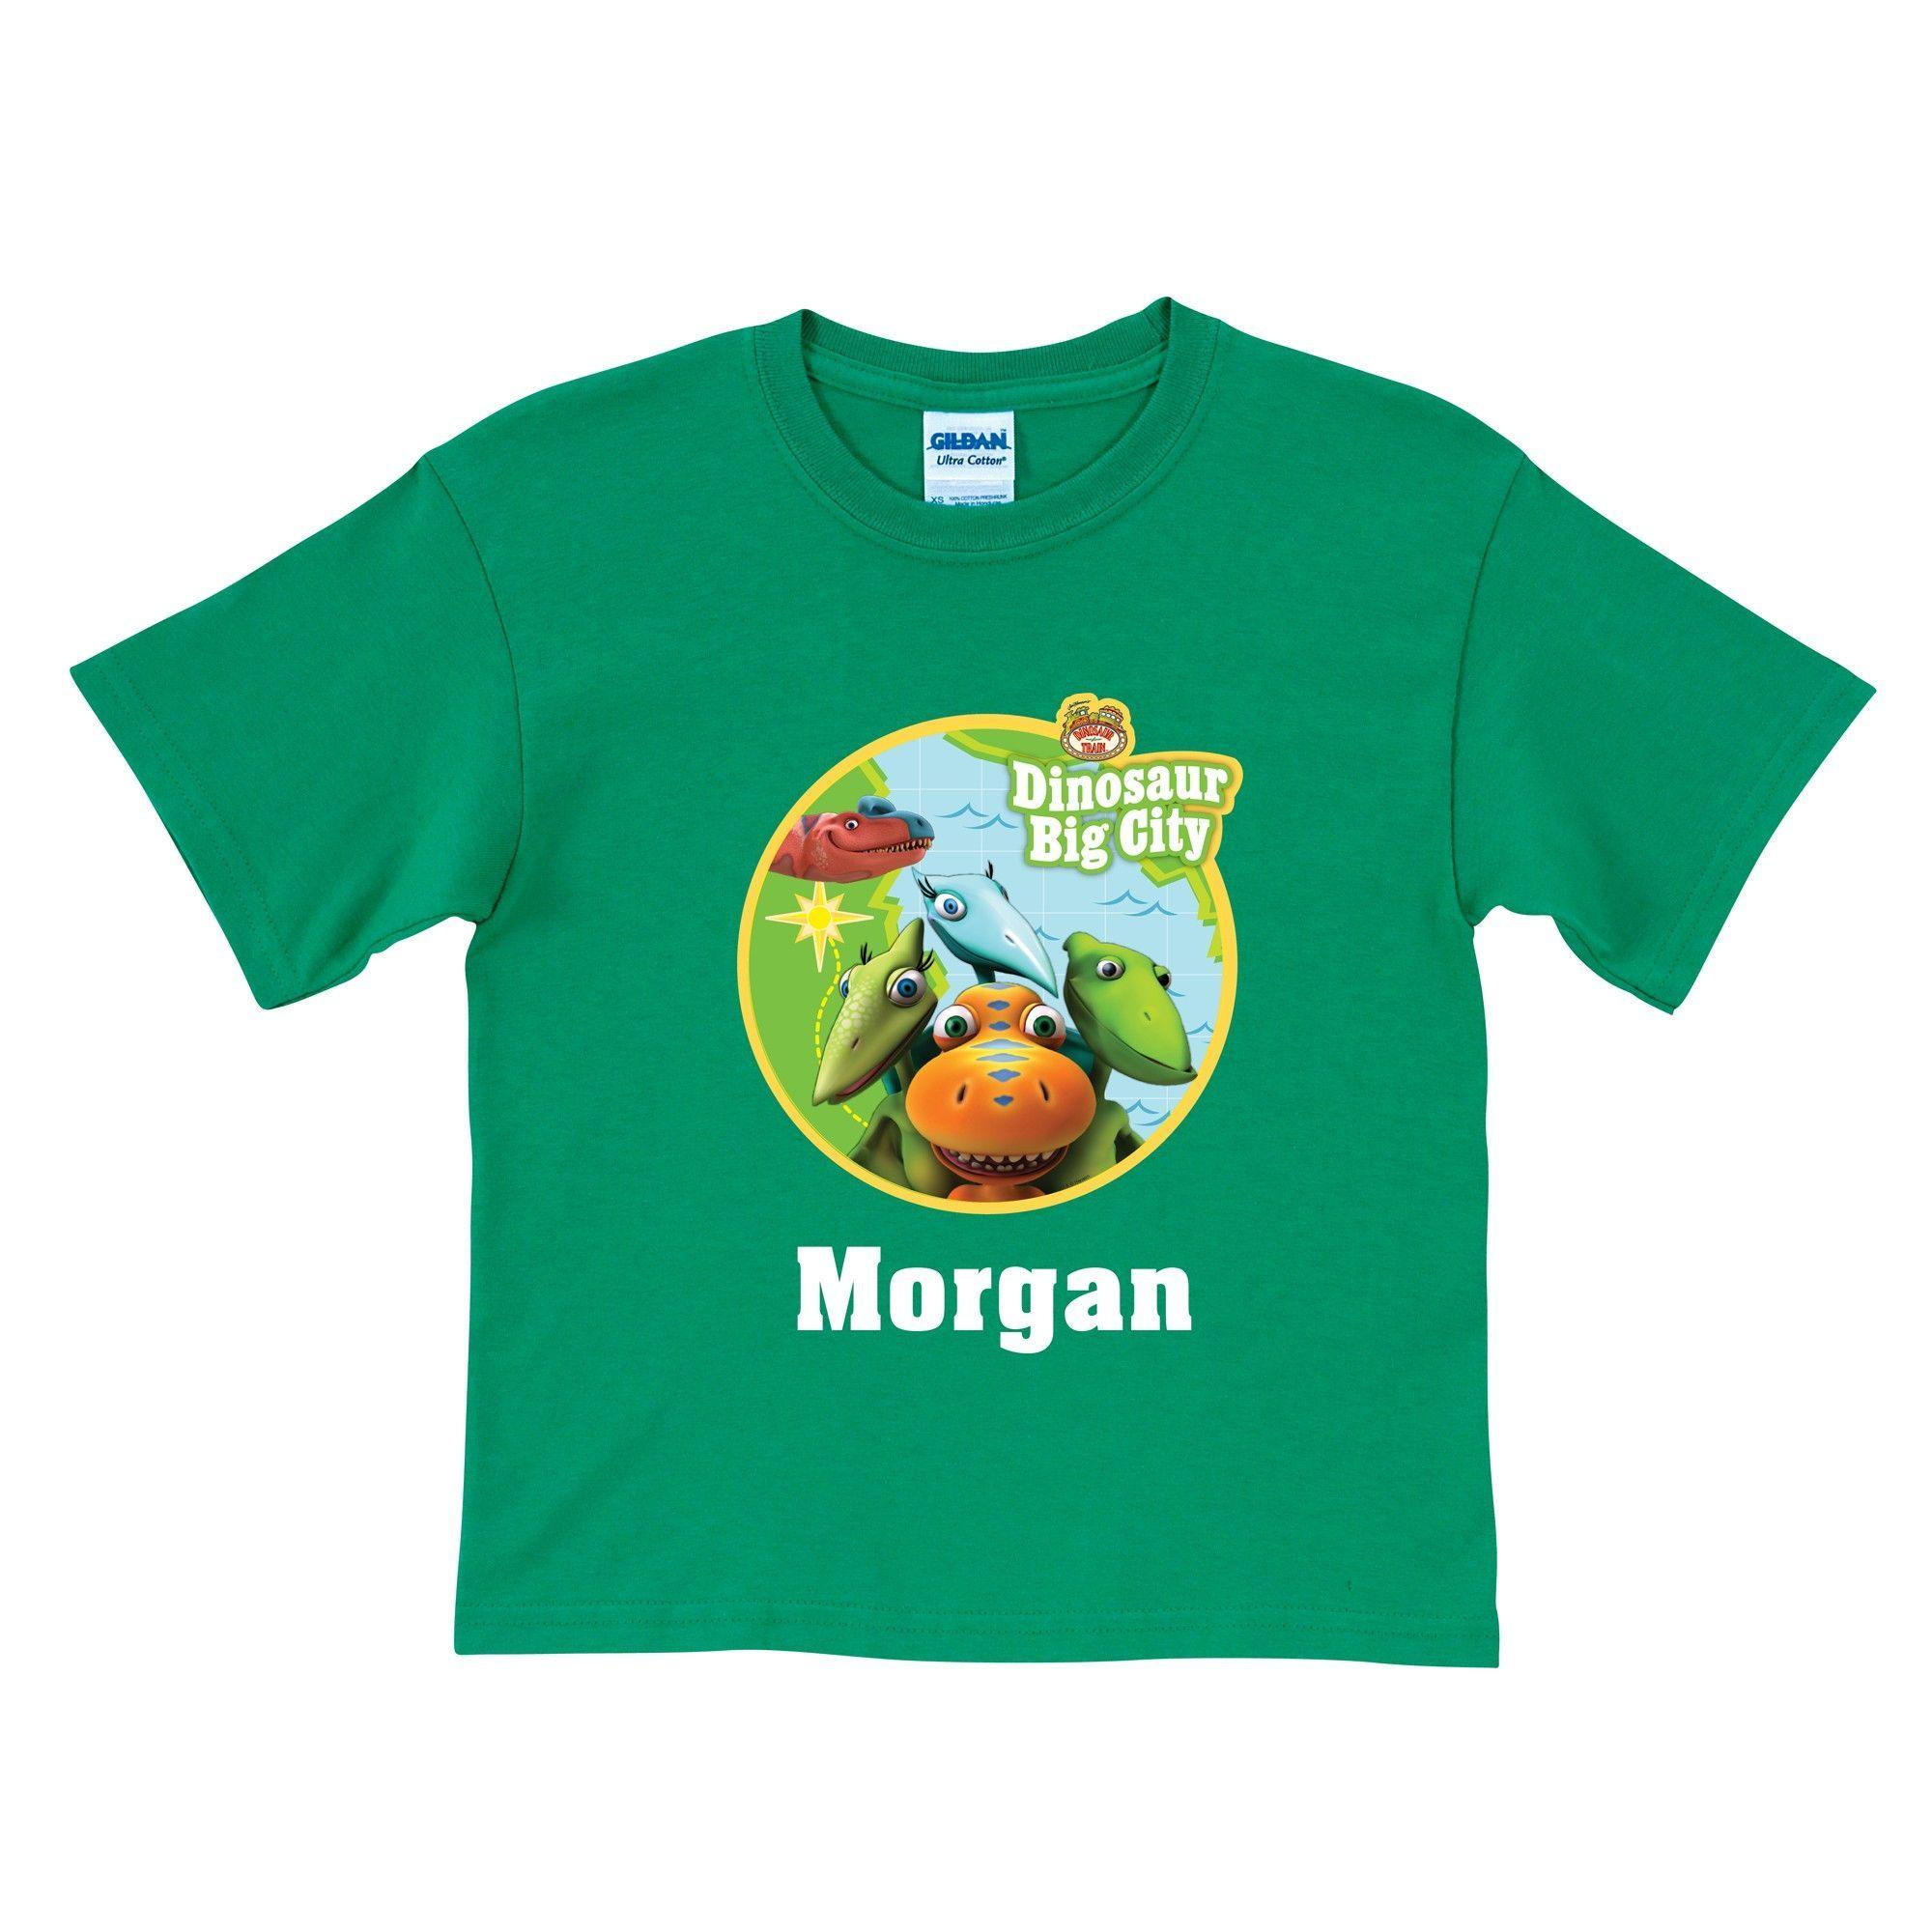 Green Dinosaur Shops Logo - Dinosaur Train Big City Adventure Green T Shirt From PBS Kids Shop